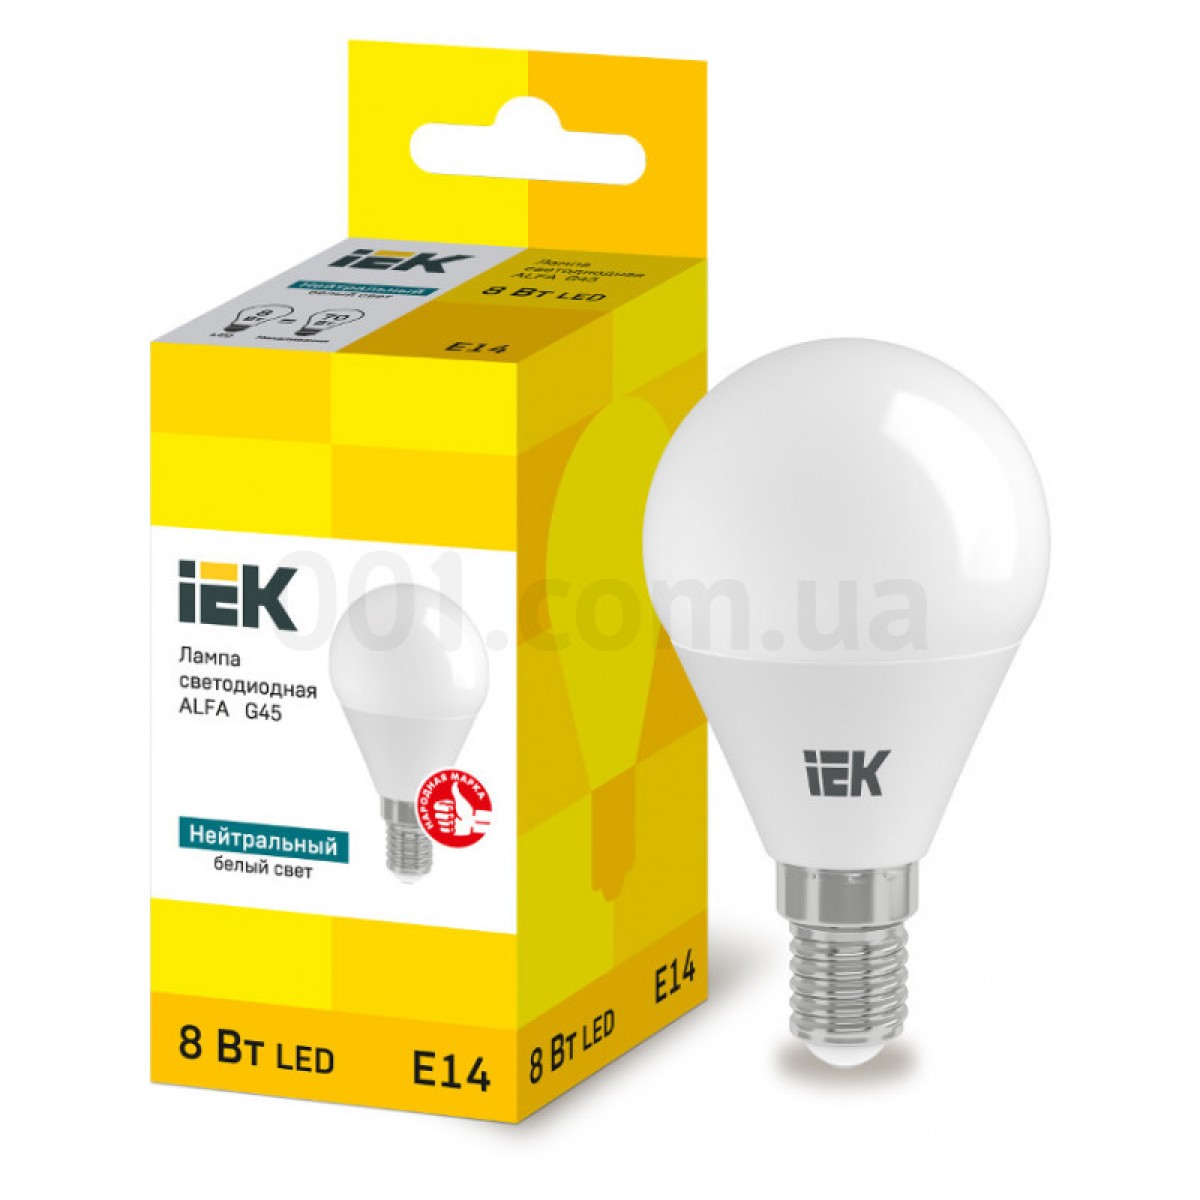 Светодиодная лампа LED ALFA G45 (шар) 8 Вт 230В 4000К E14, IEK 256_256.jpg